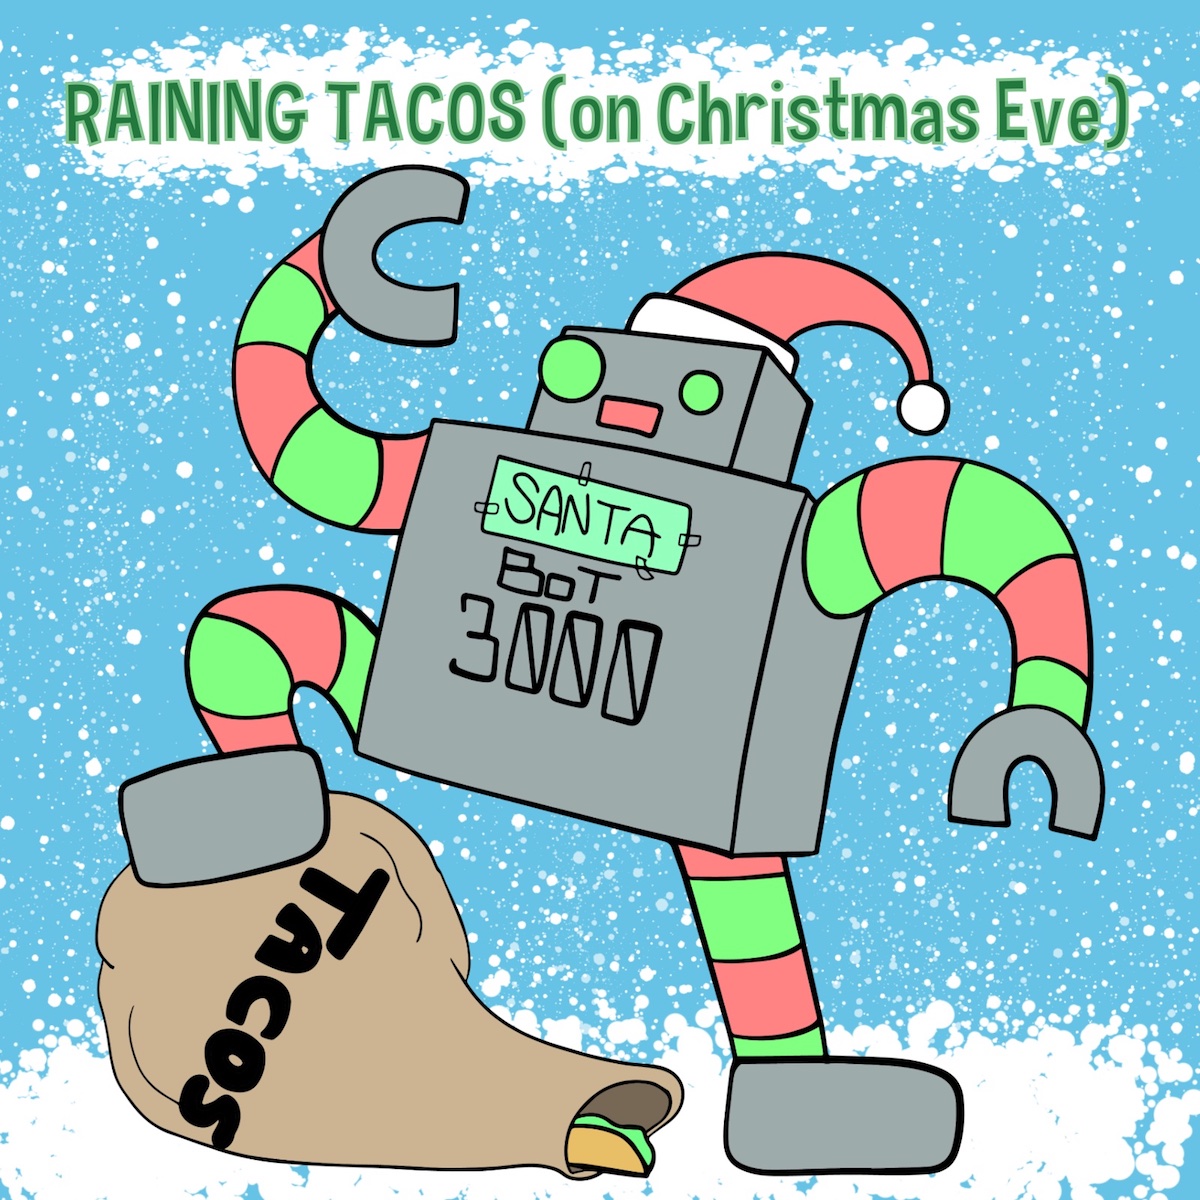 It's raining tacos, Wiki